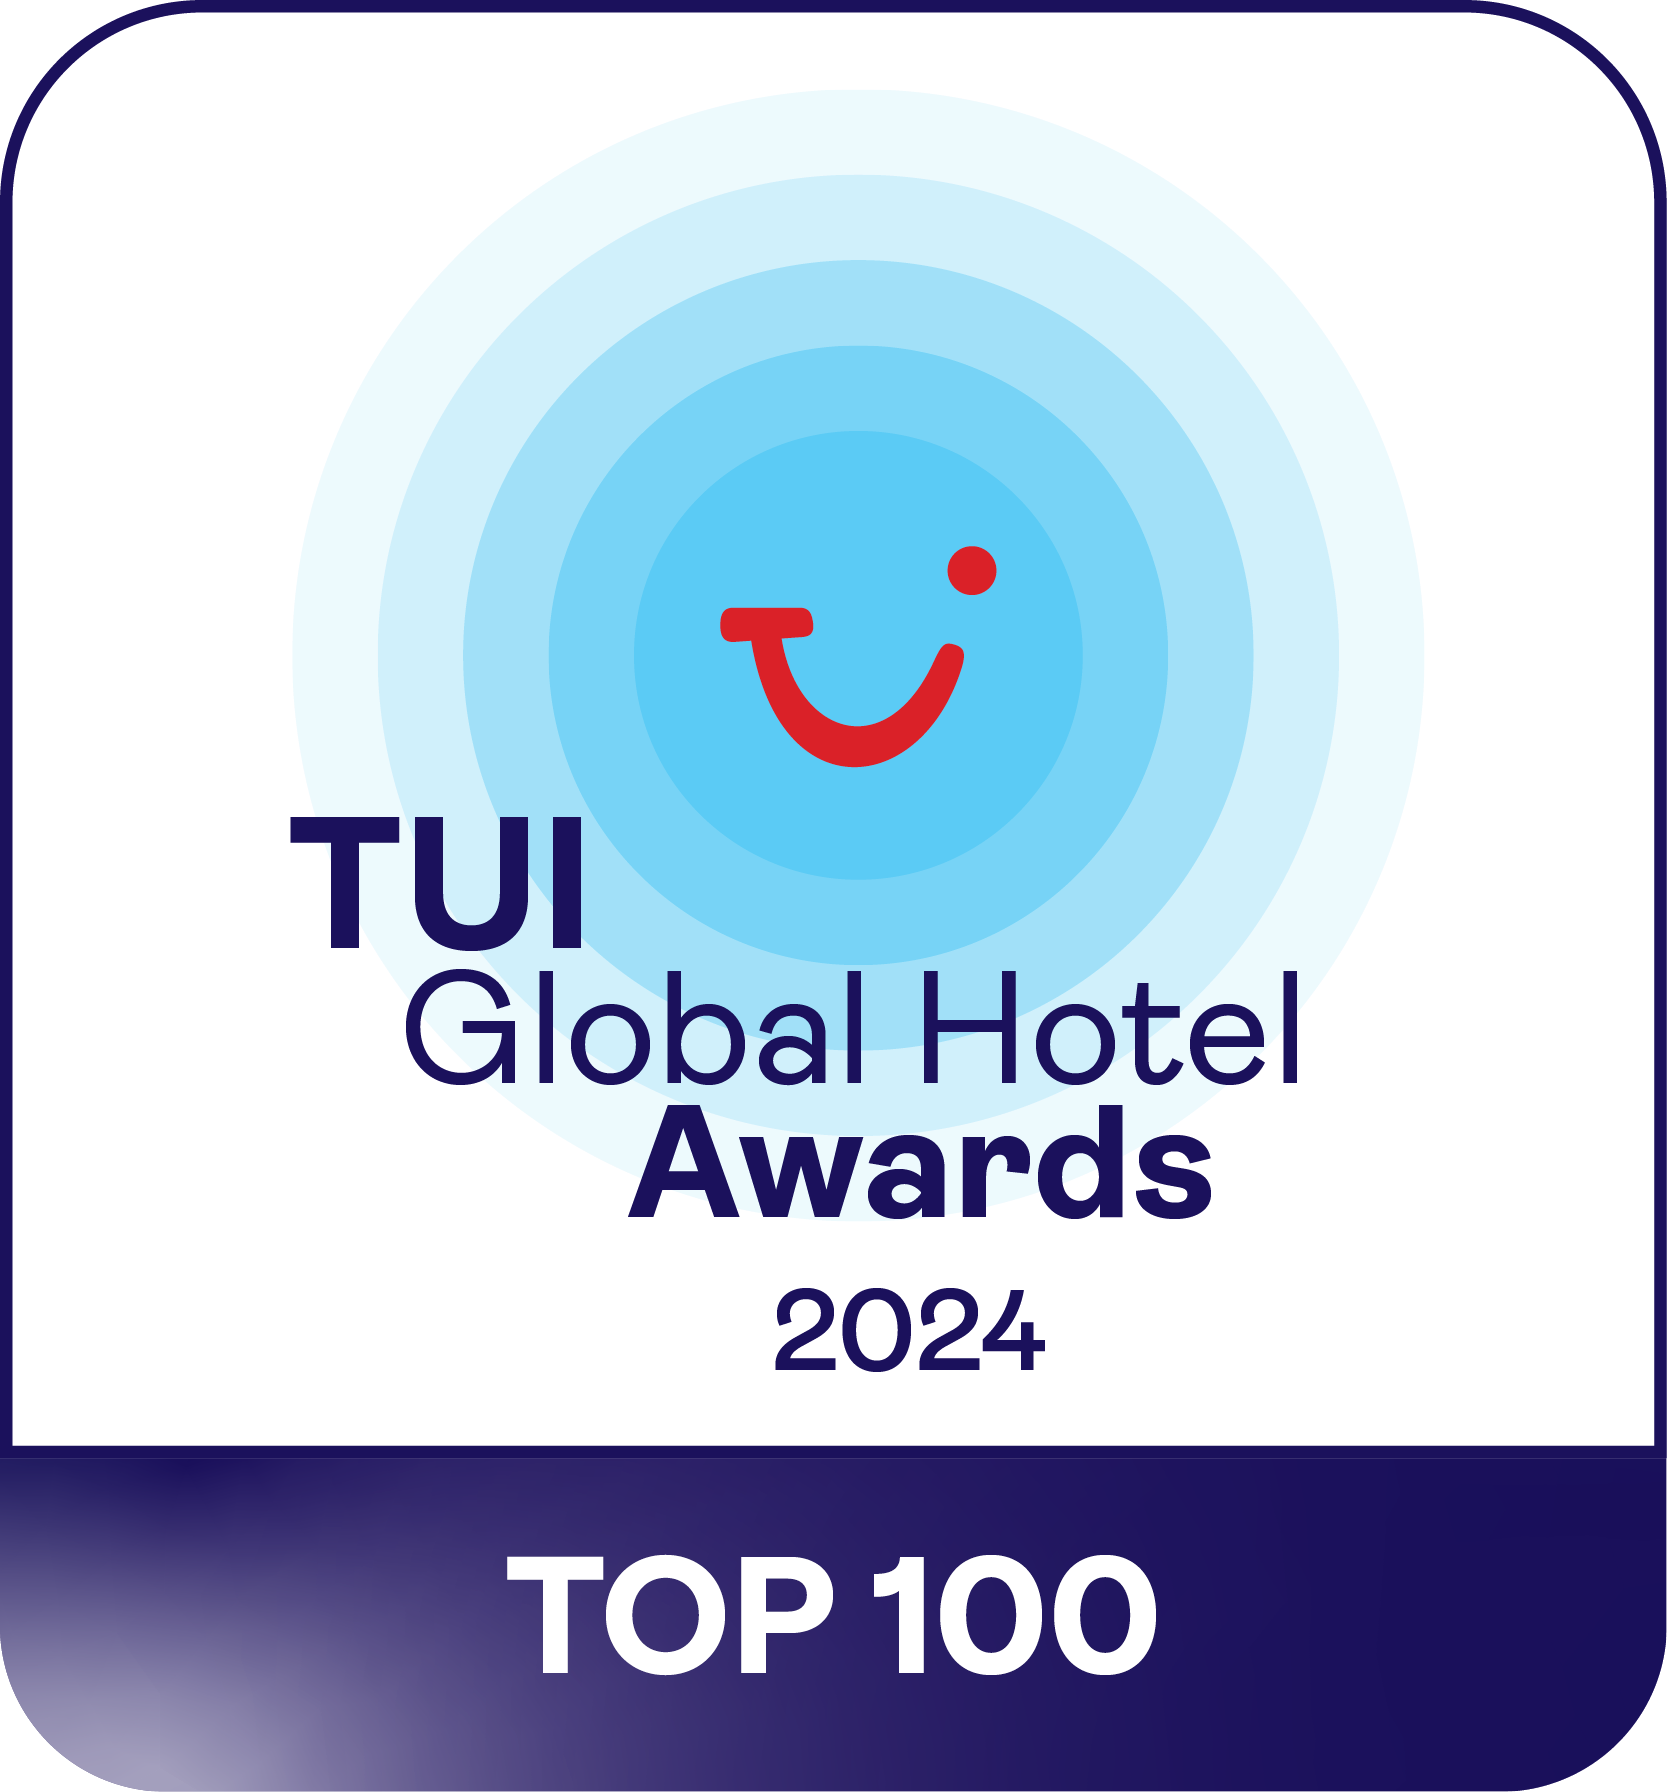 a tui global hotel award top 100 badge